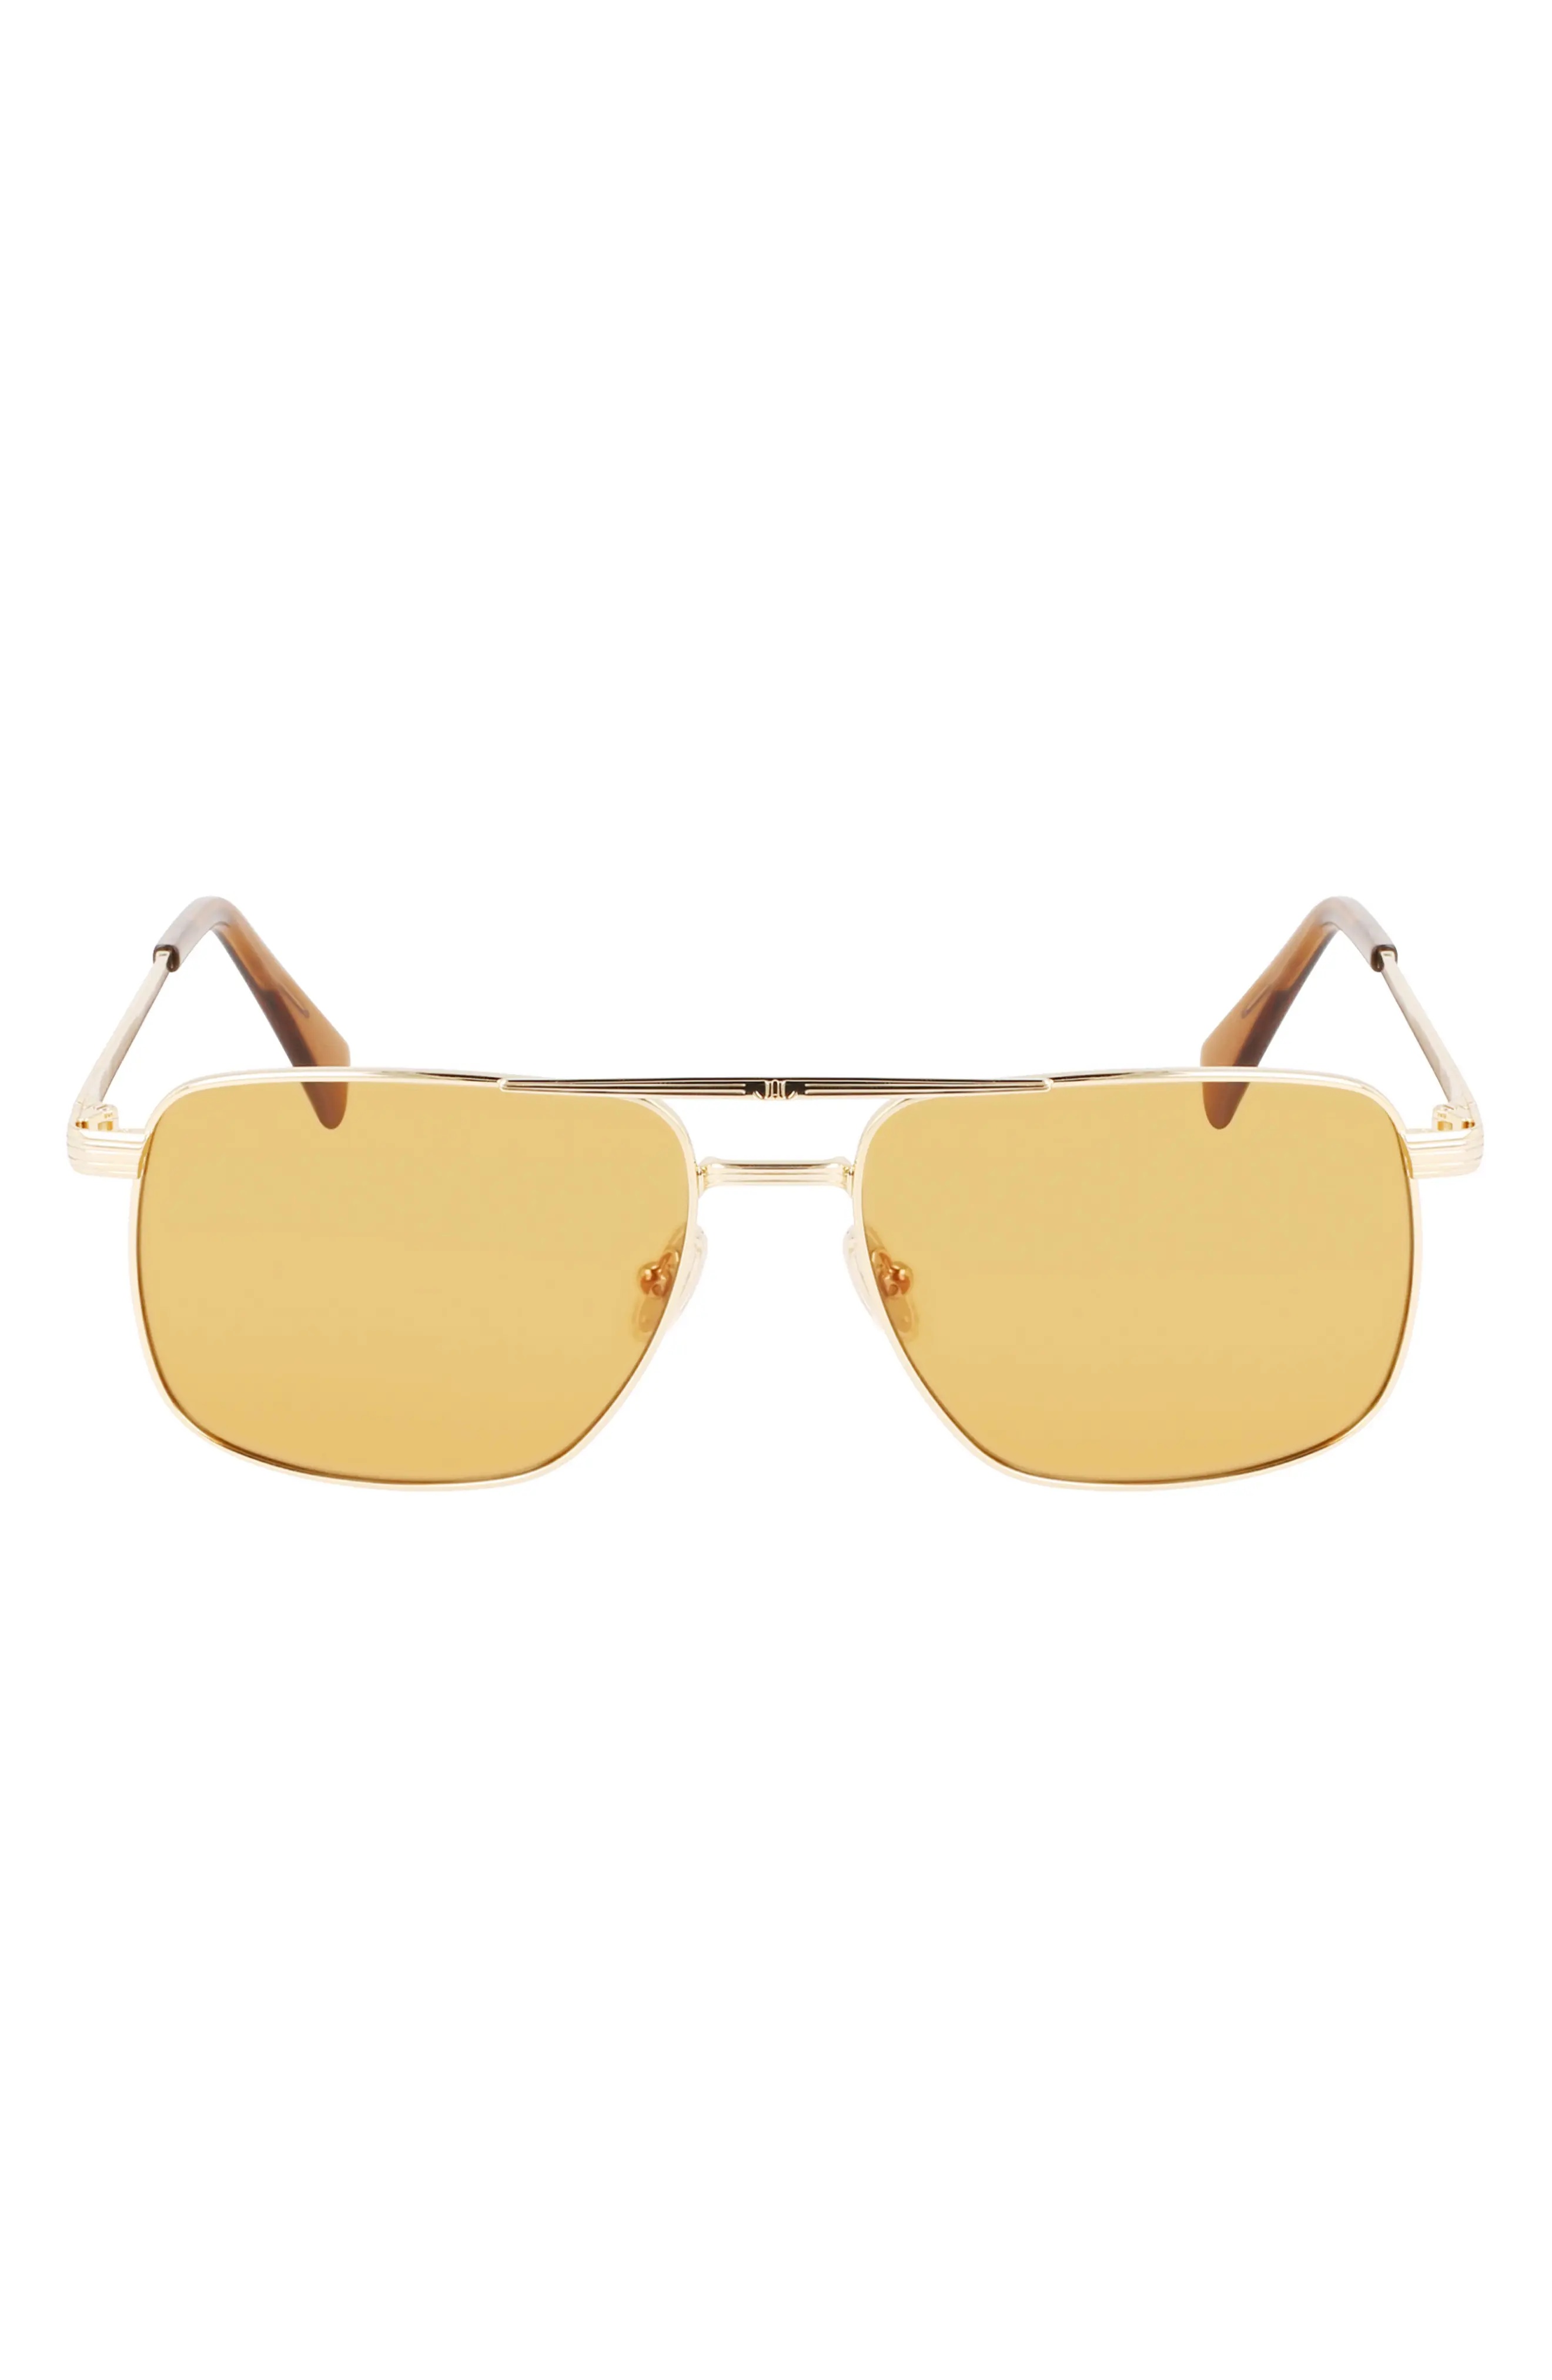 JL 58mm Rectangular Sunglasses in Gold /Caramel - 1